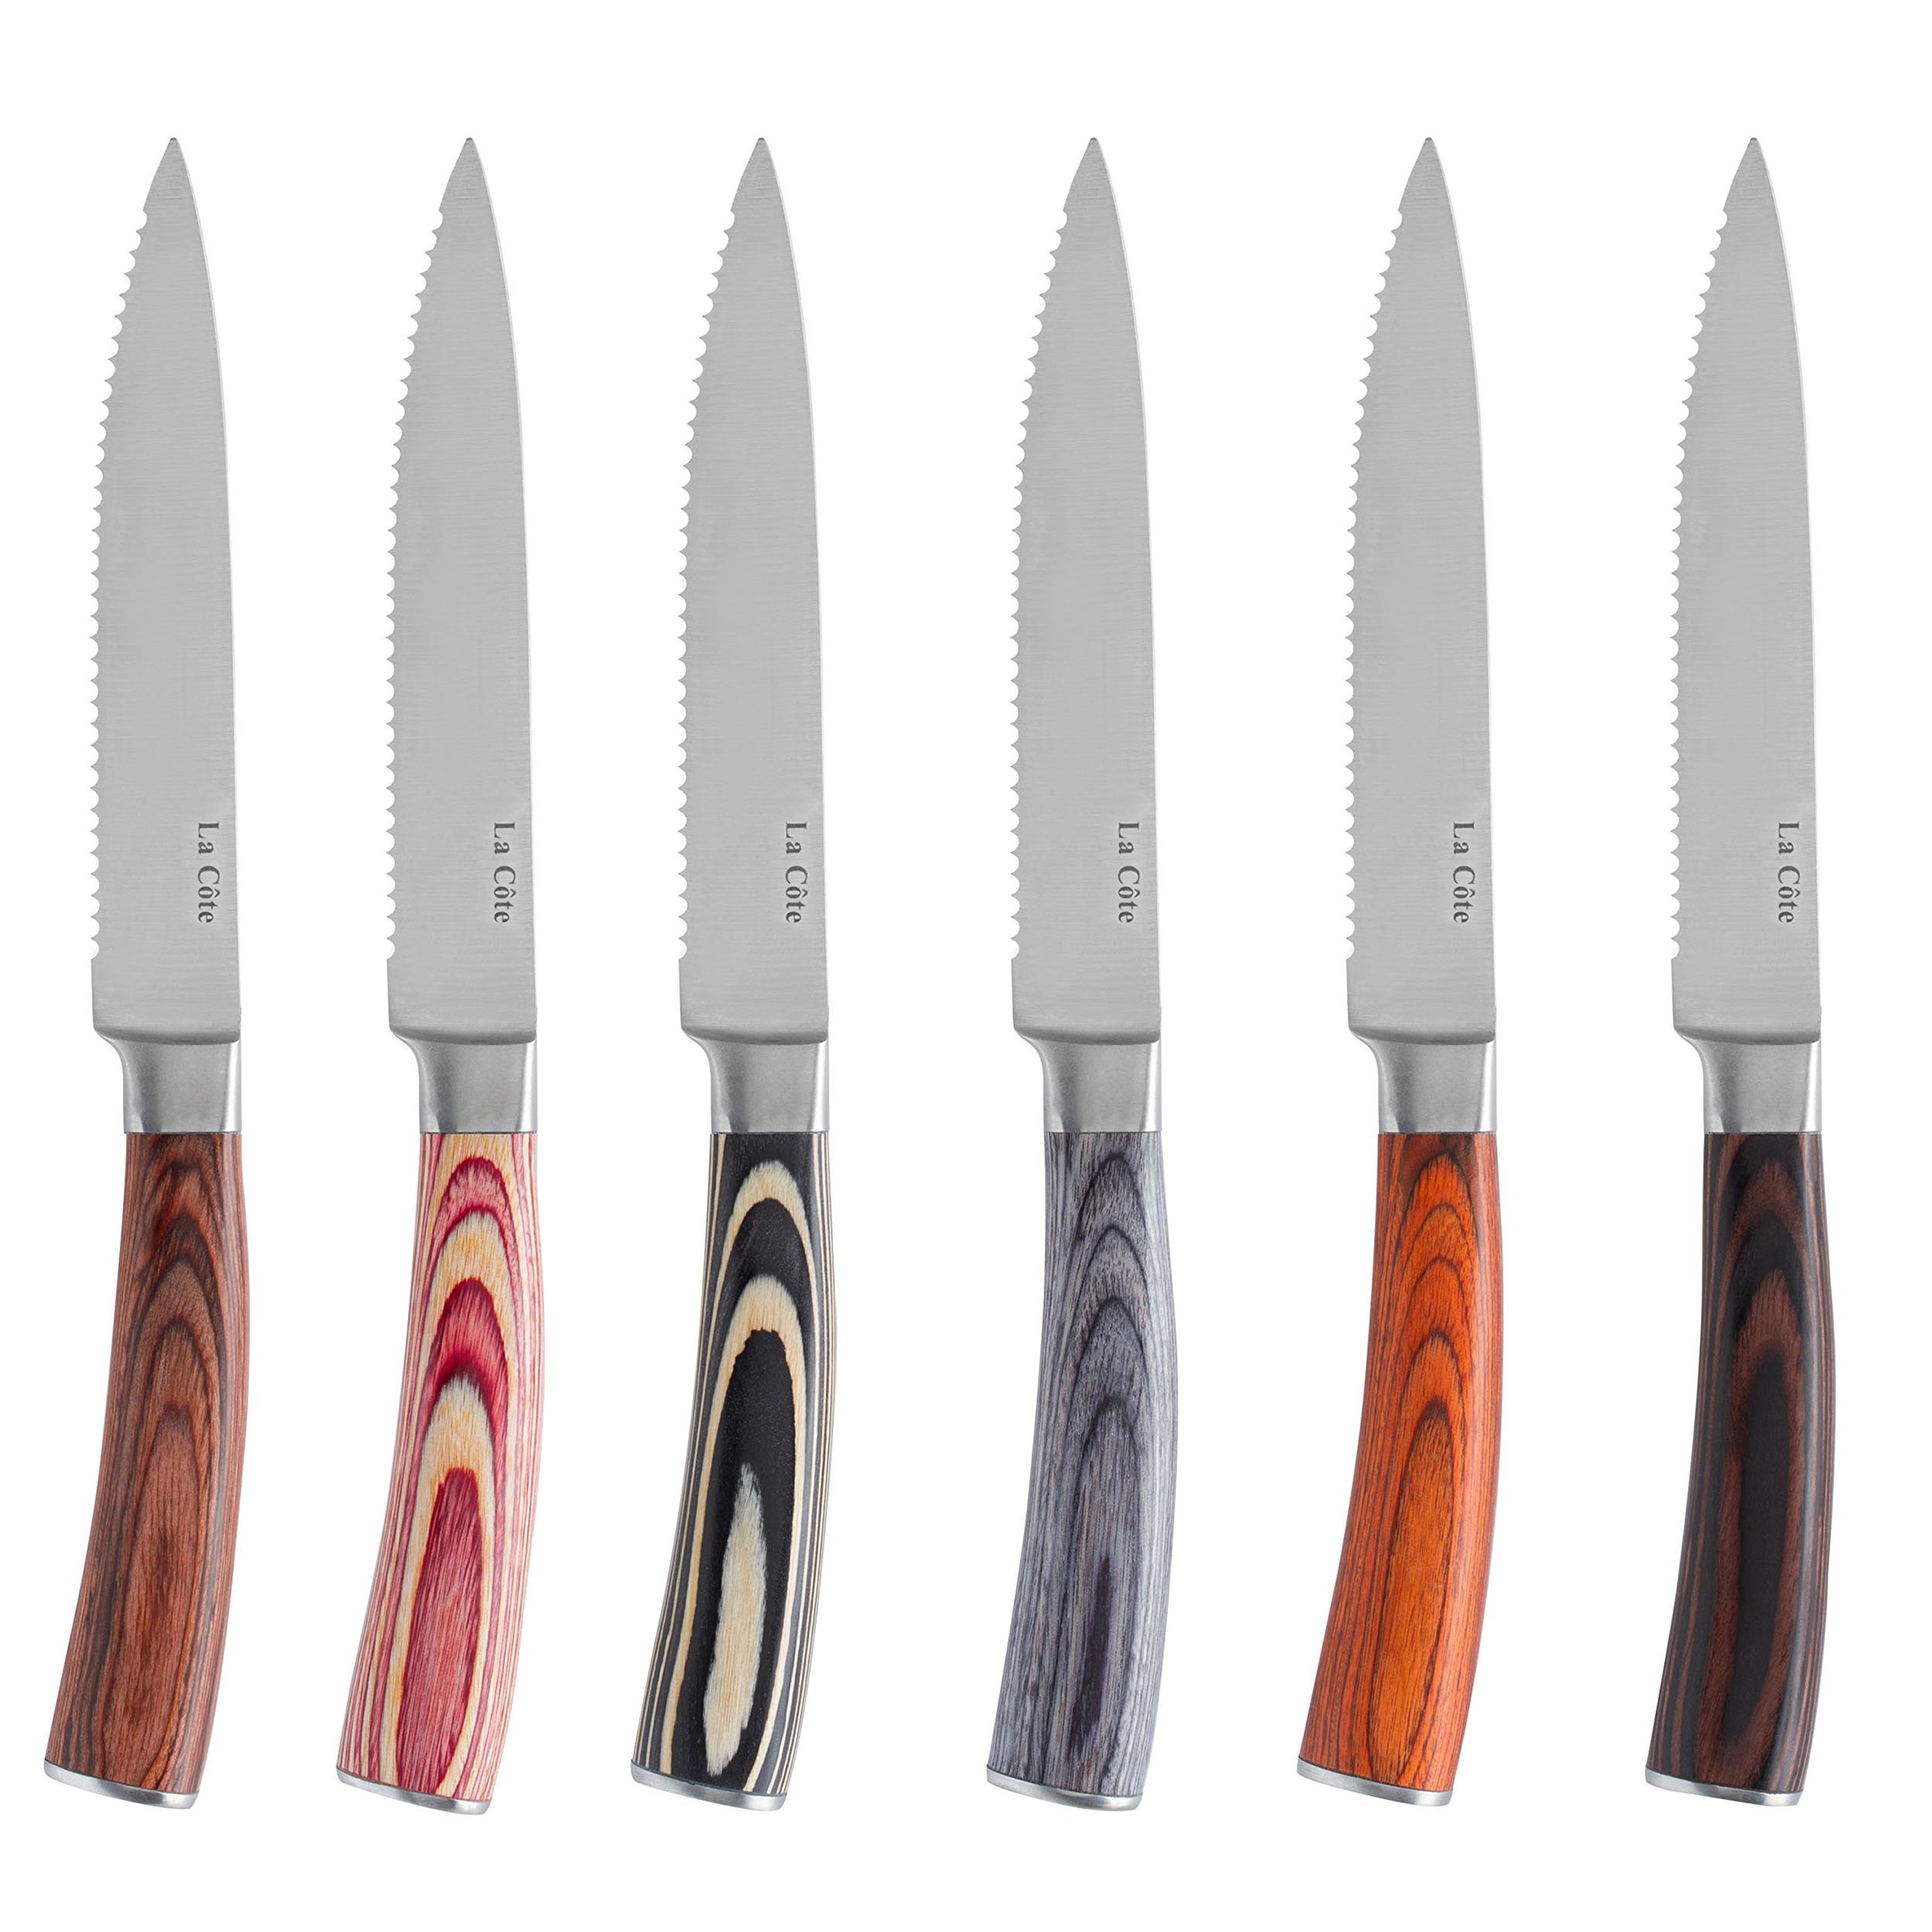 La Cote 6 Piece Steak Knives Set Japanese Stainless Steel Pakka Wood Handle In Gift Box (6 PC Pakka Wood)